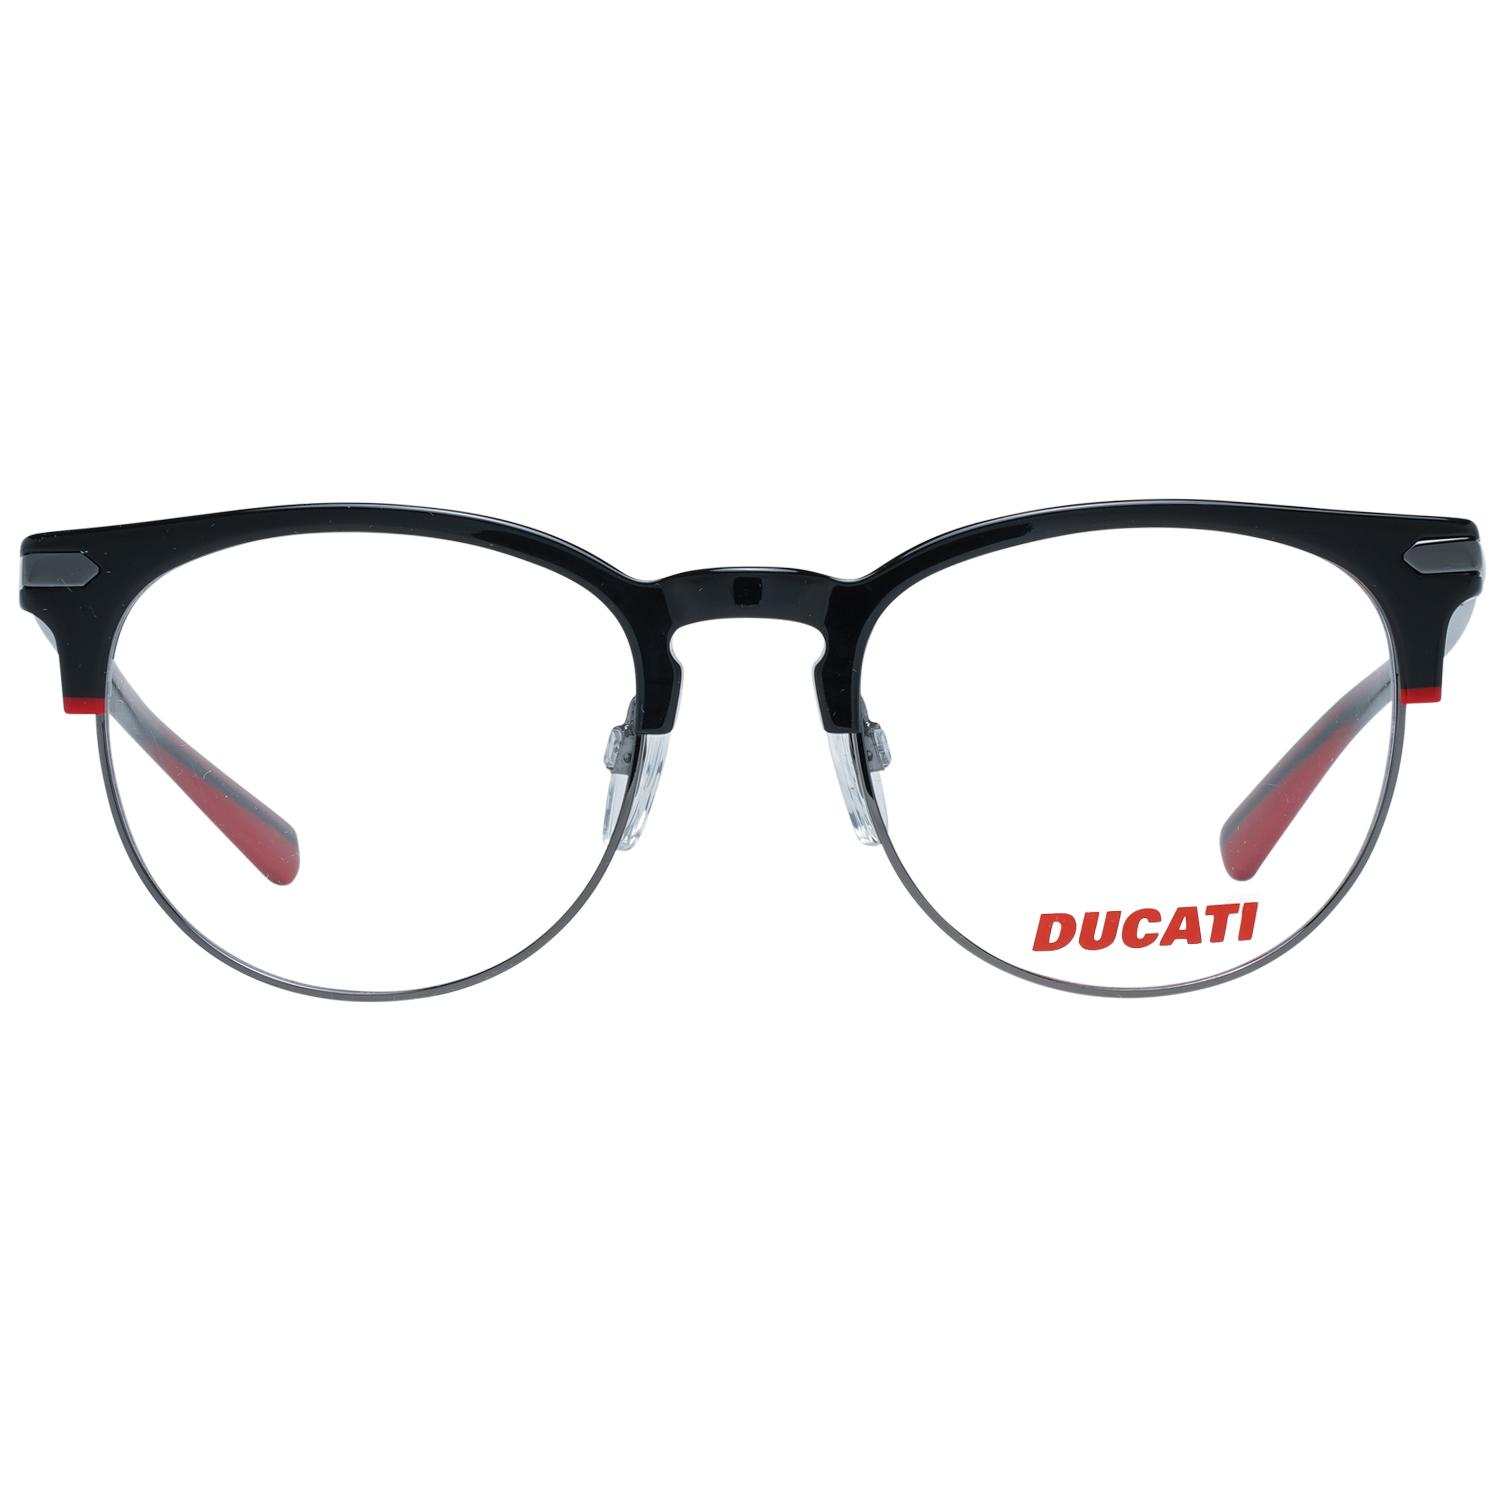 Ducati Frames Ducati Optical Frame DA1010 001 51 Eyeglasses Eyewear UK USA Australia 